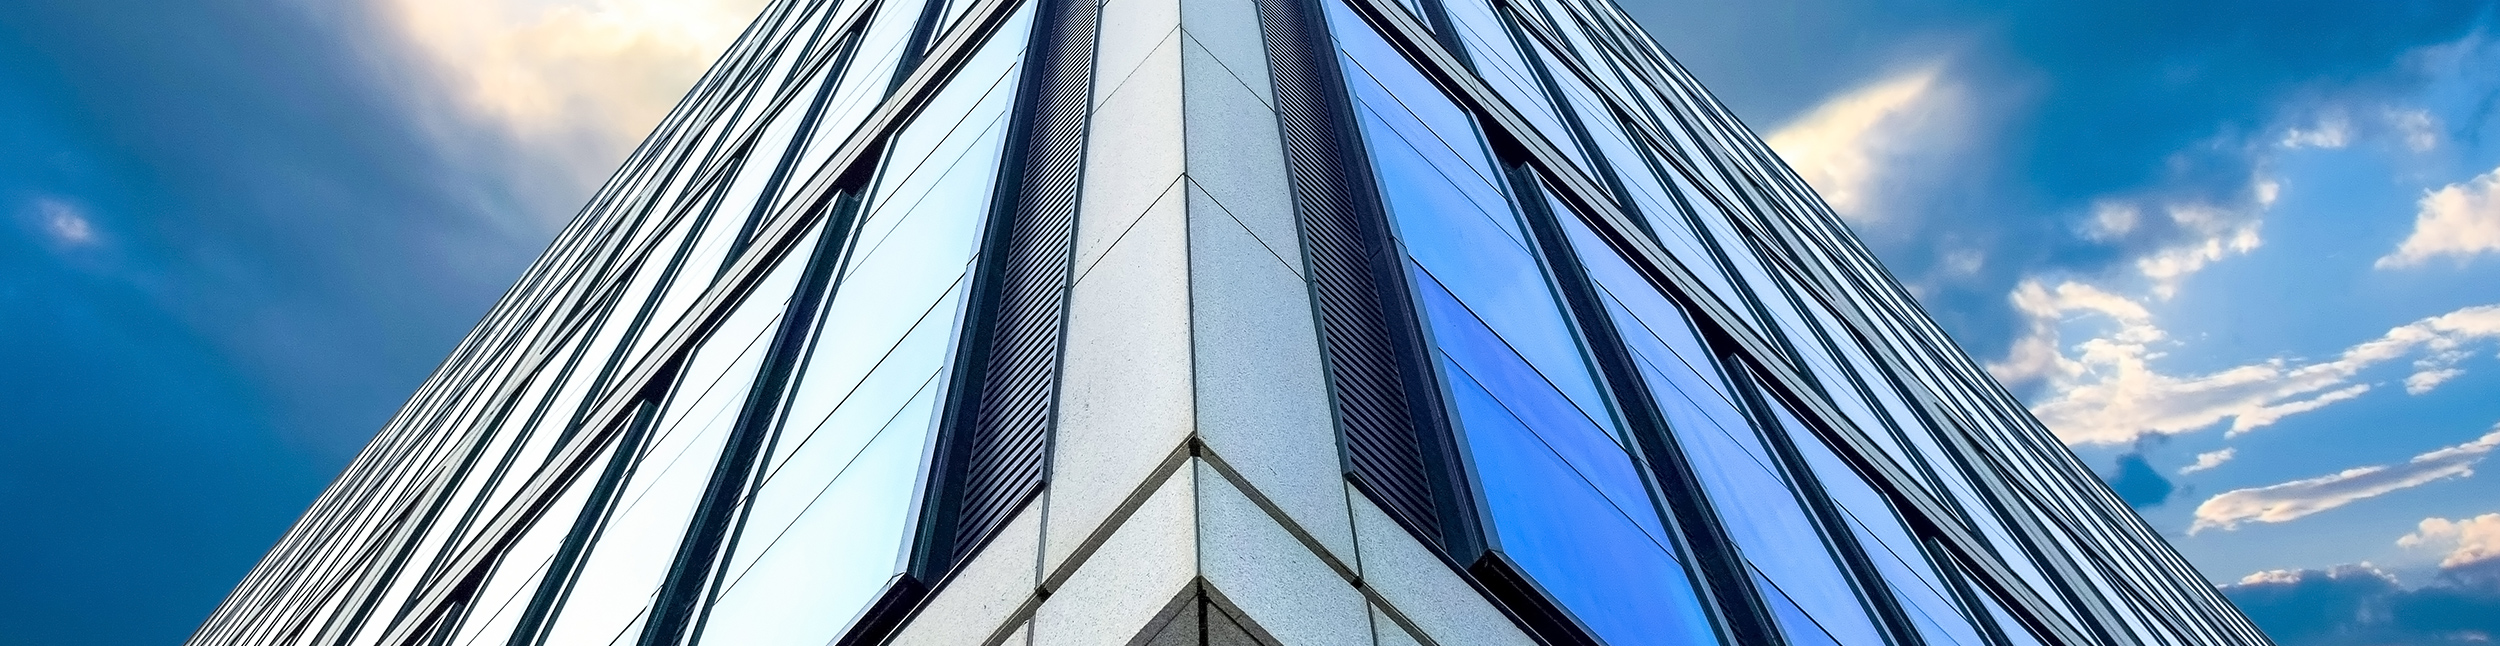 Perspectives façade en menuiseries aluminium